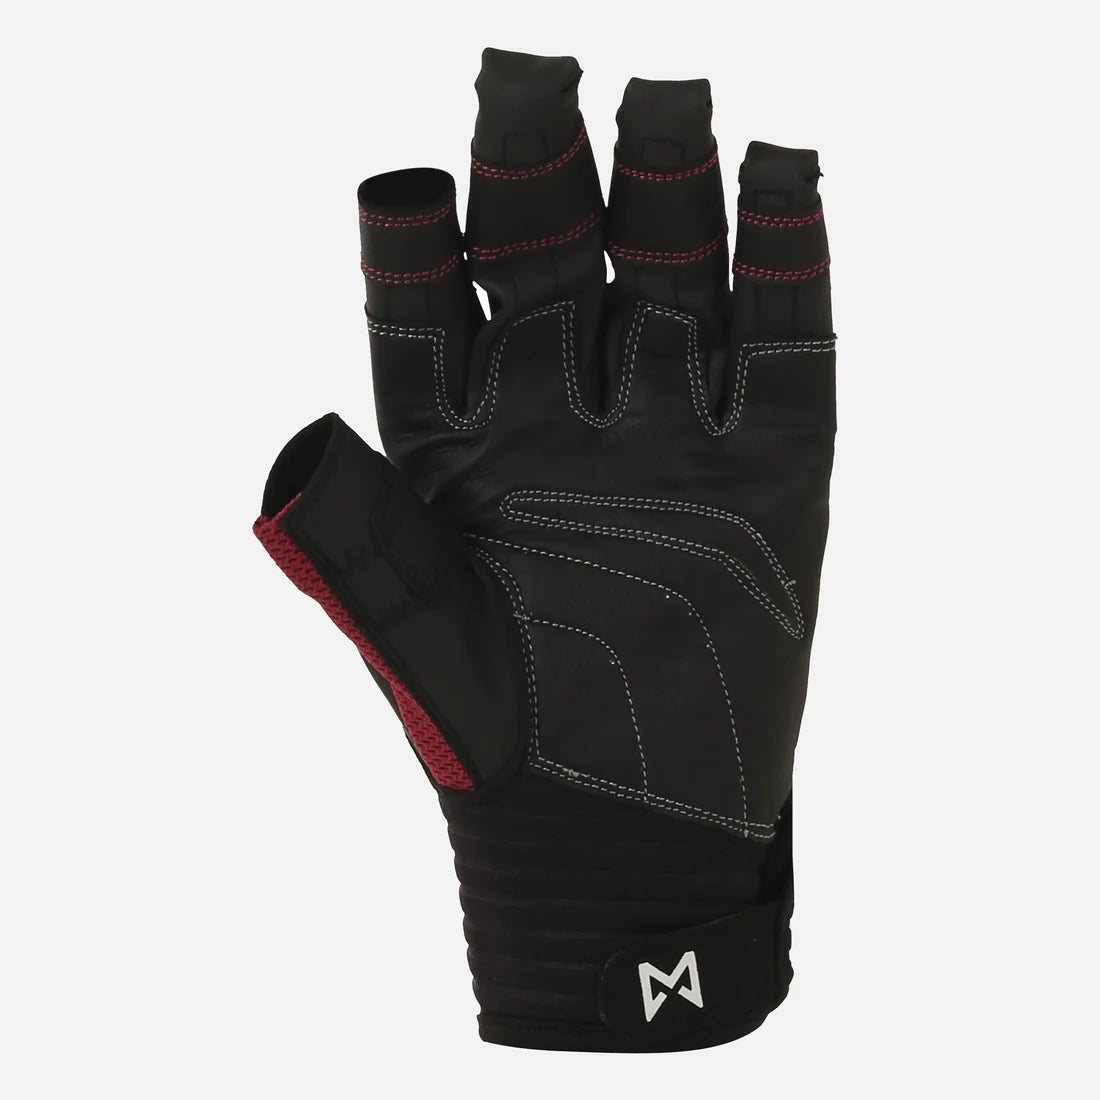 Segelhandschuhe Racing Gloves lang (2 Finger offen)